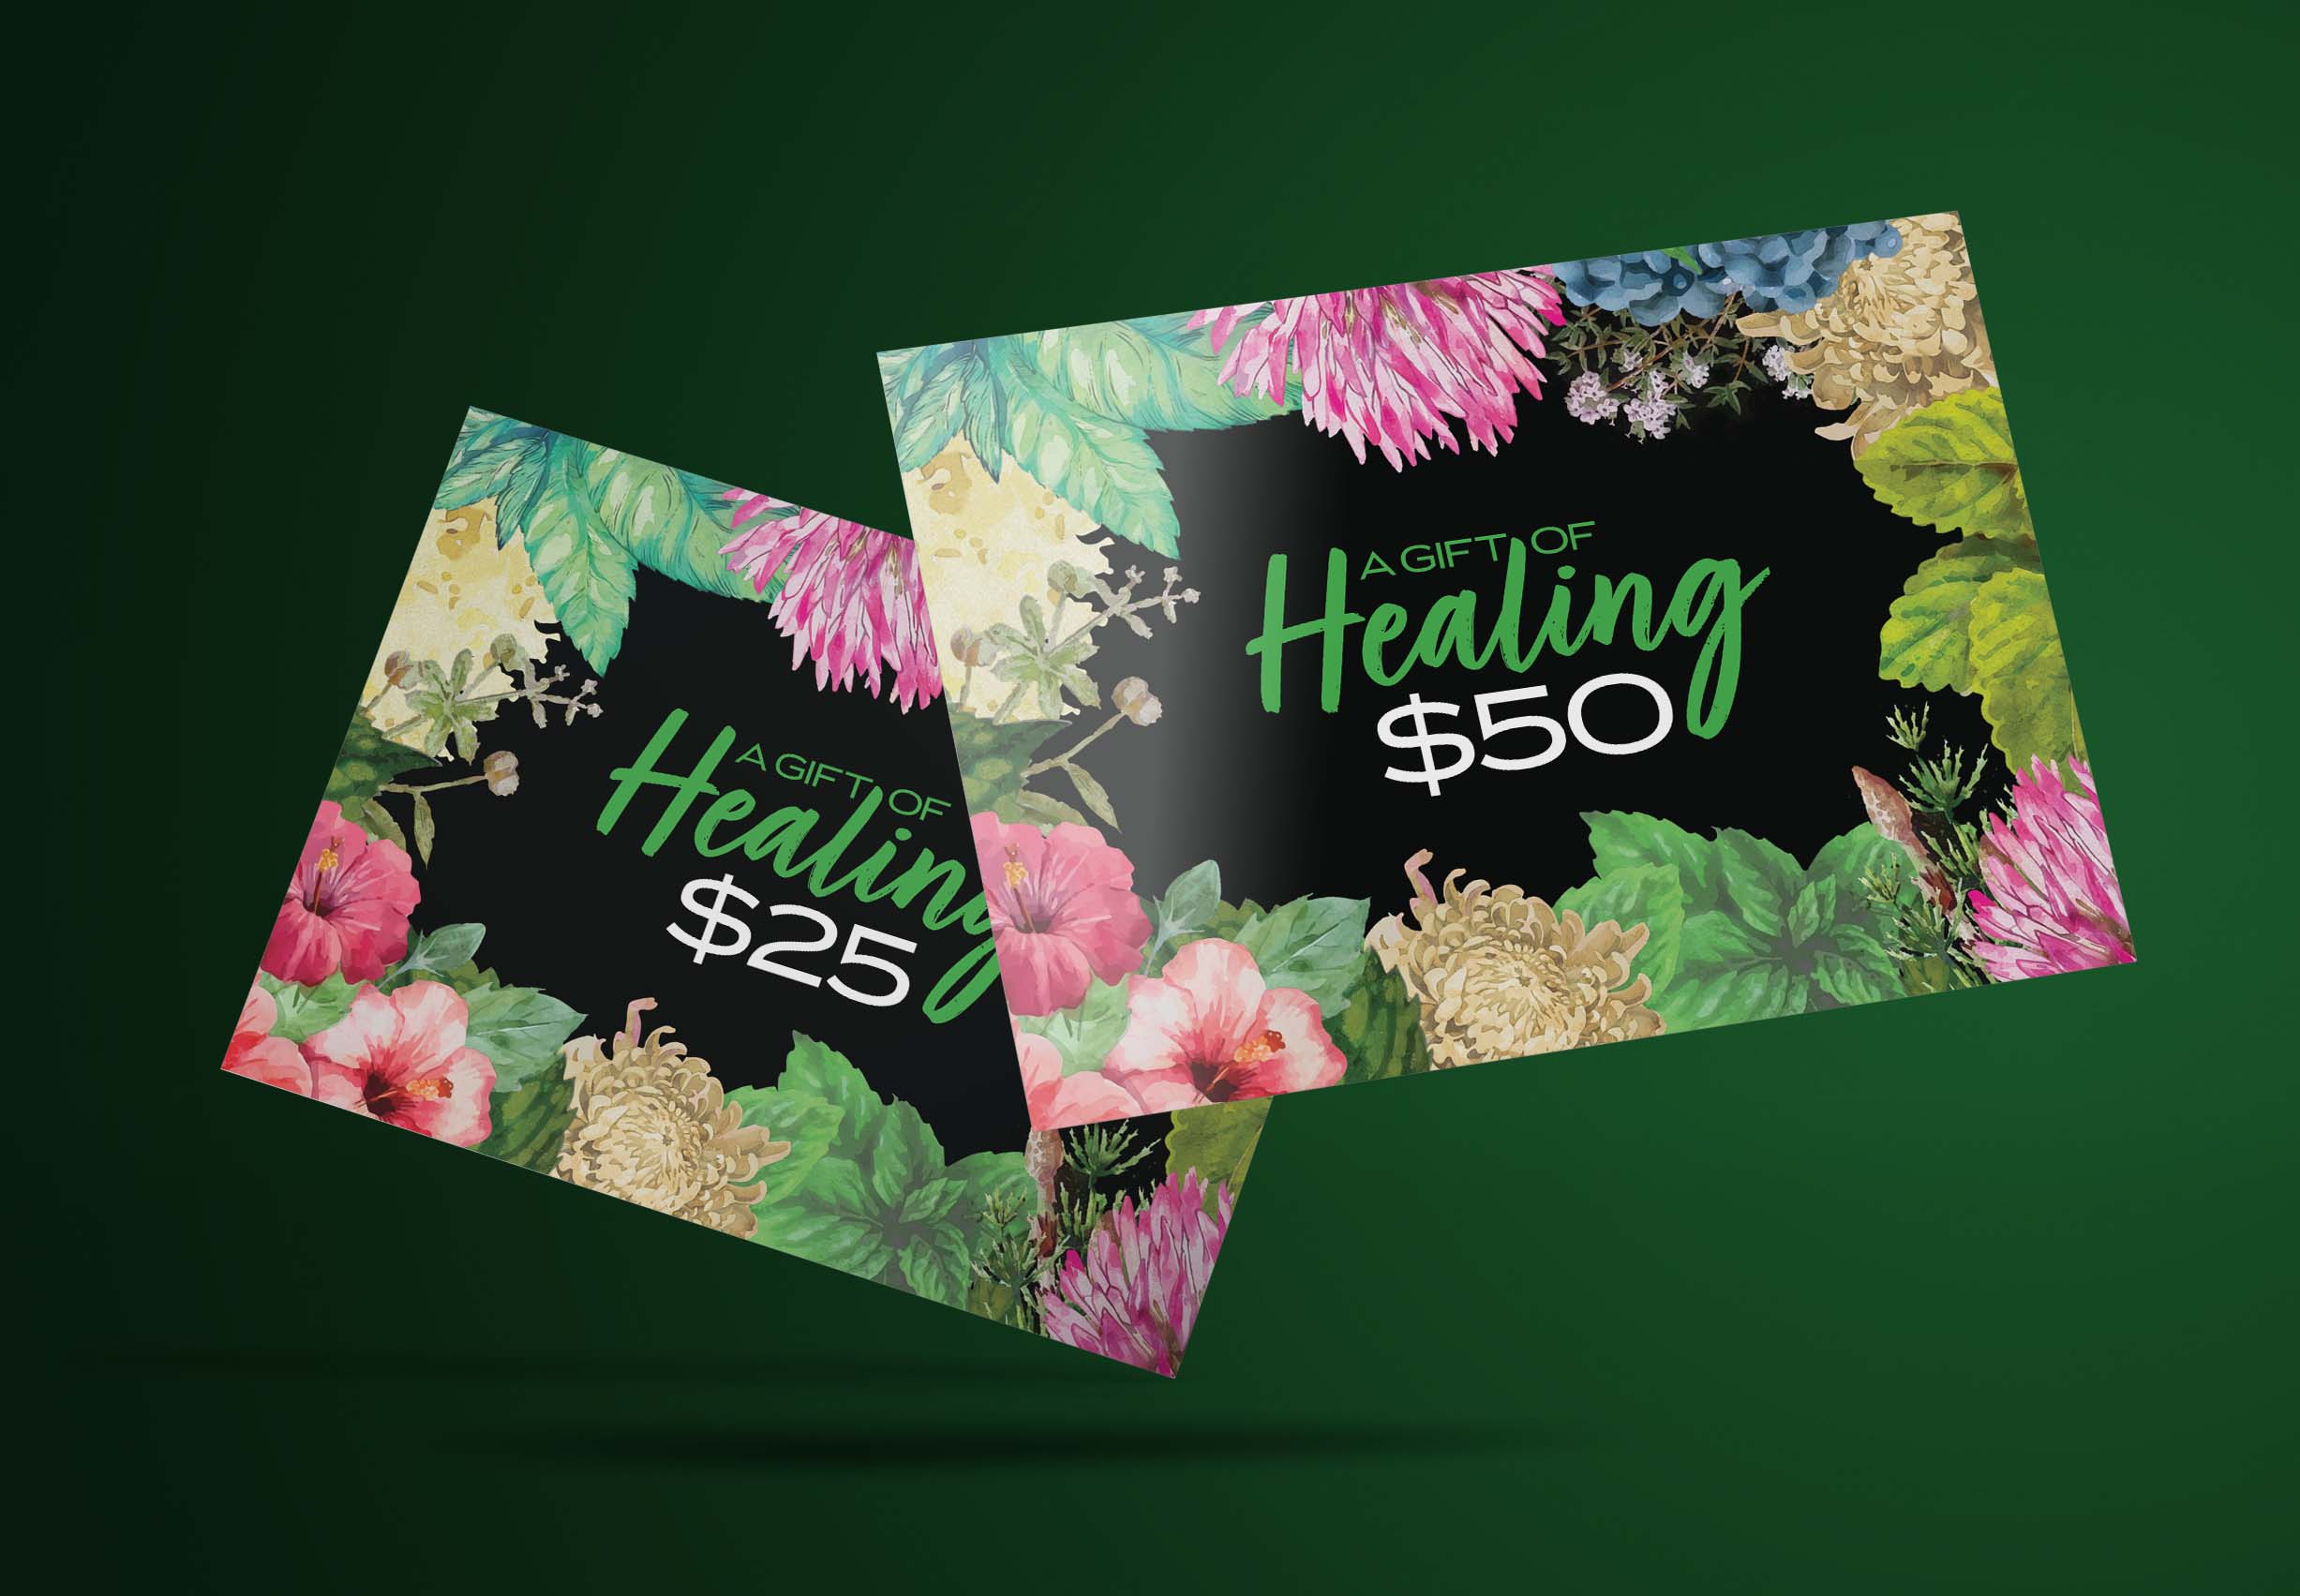 Spirit Healing Tea Branding and Website